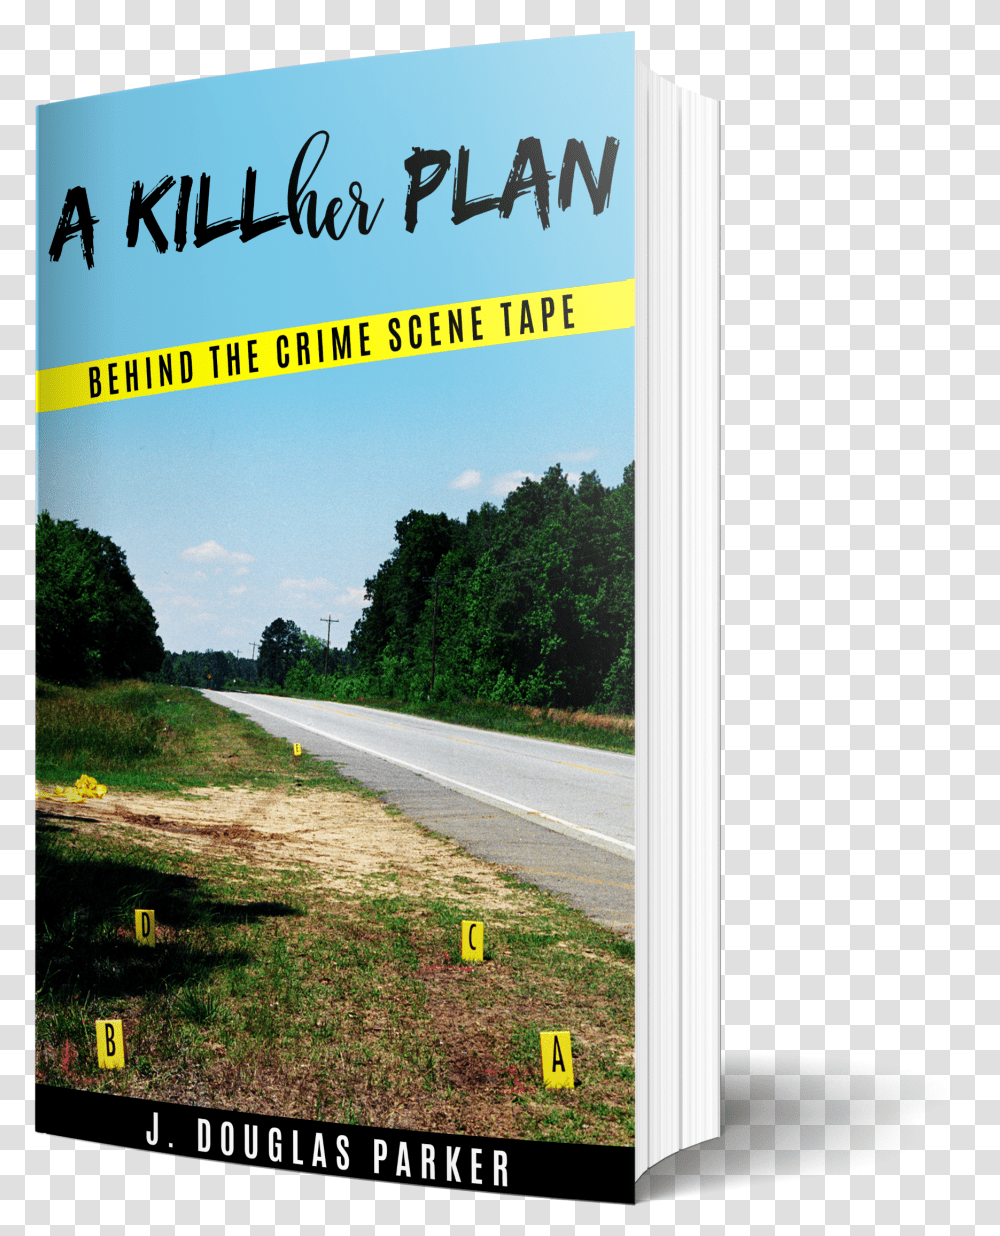 A Killher Plan Behind The Crime Scene Tape Transparent Png